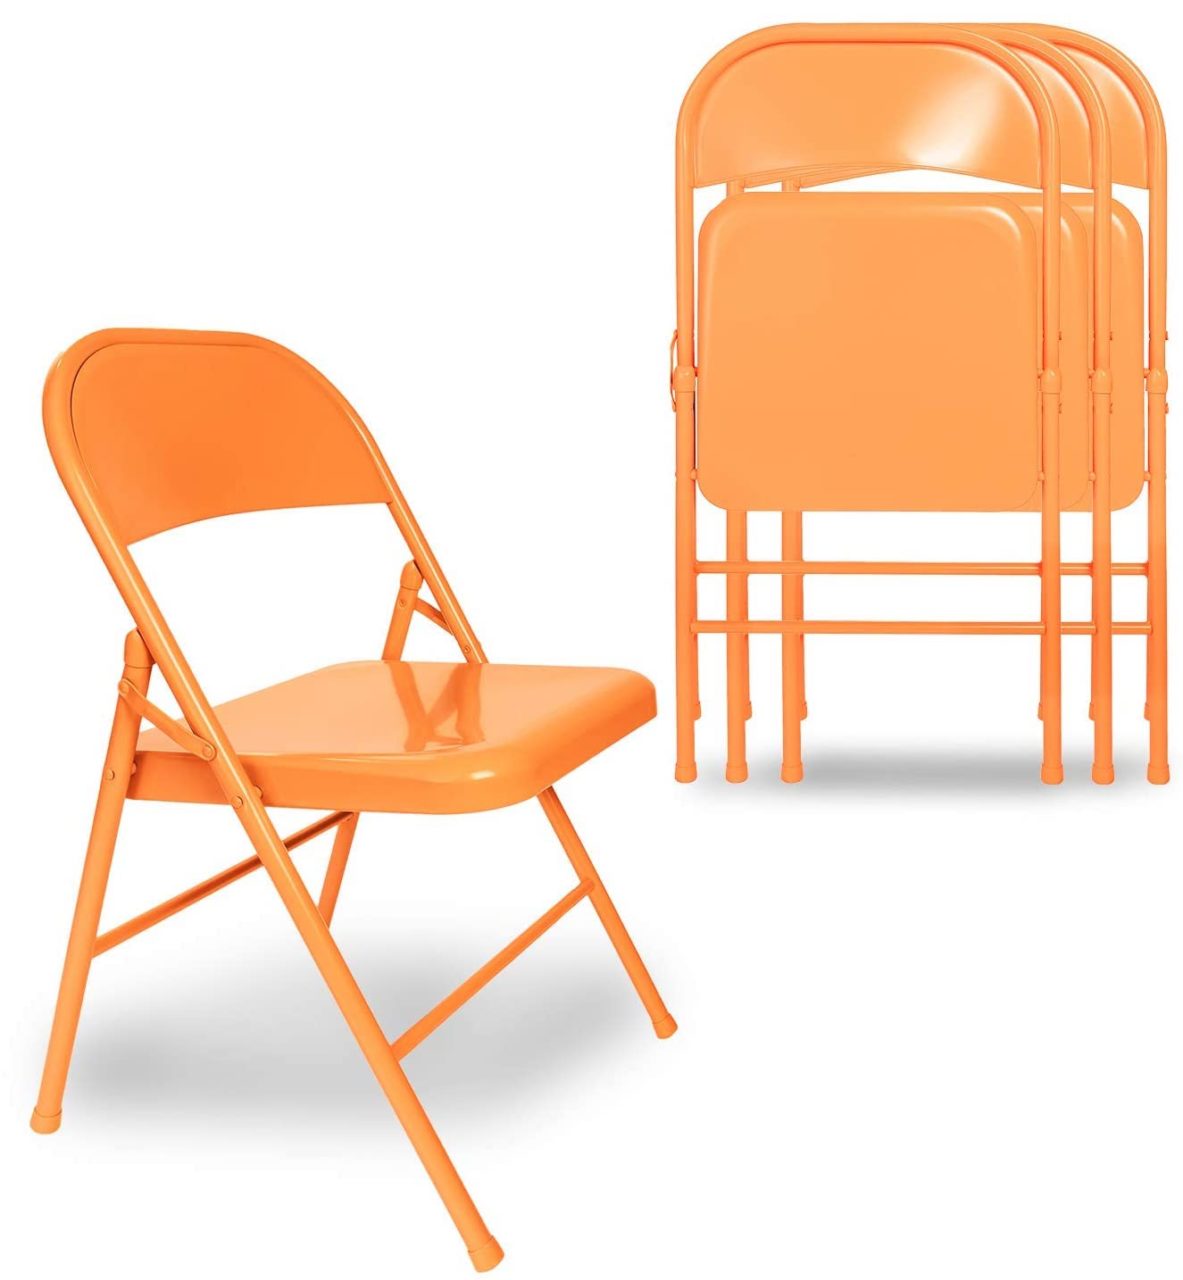 Orange folding chairs